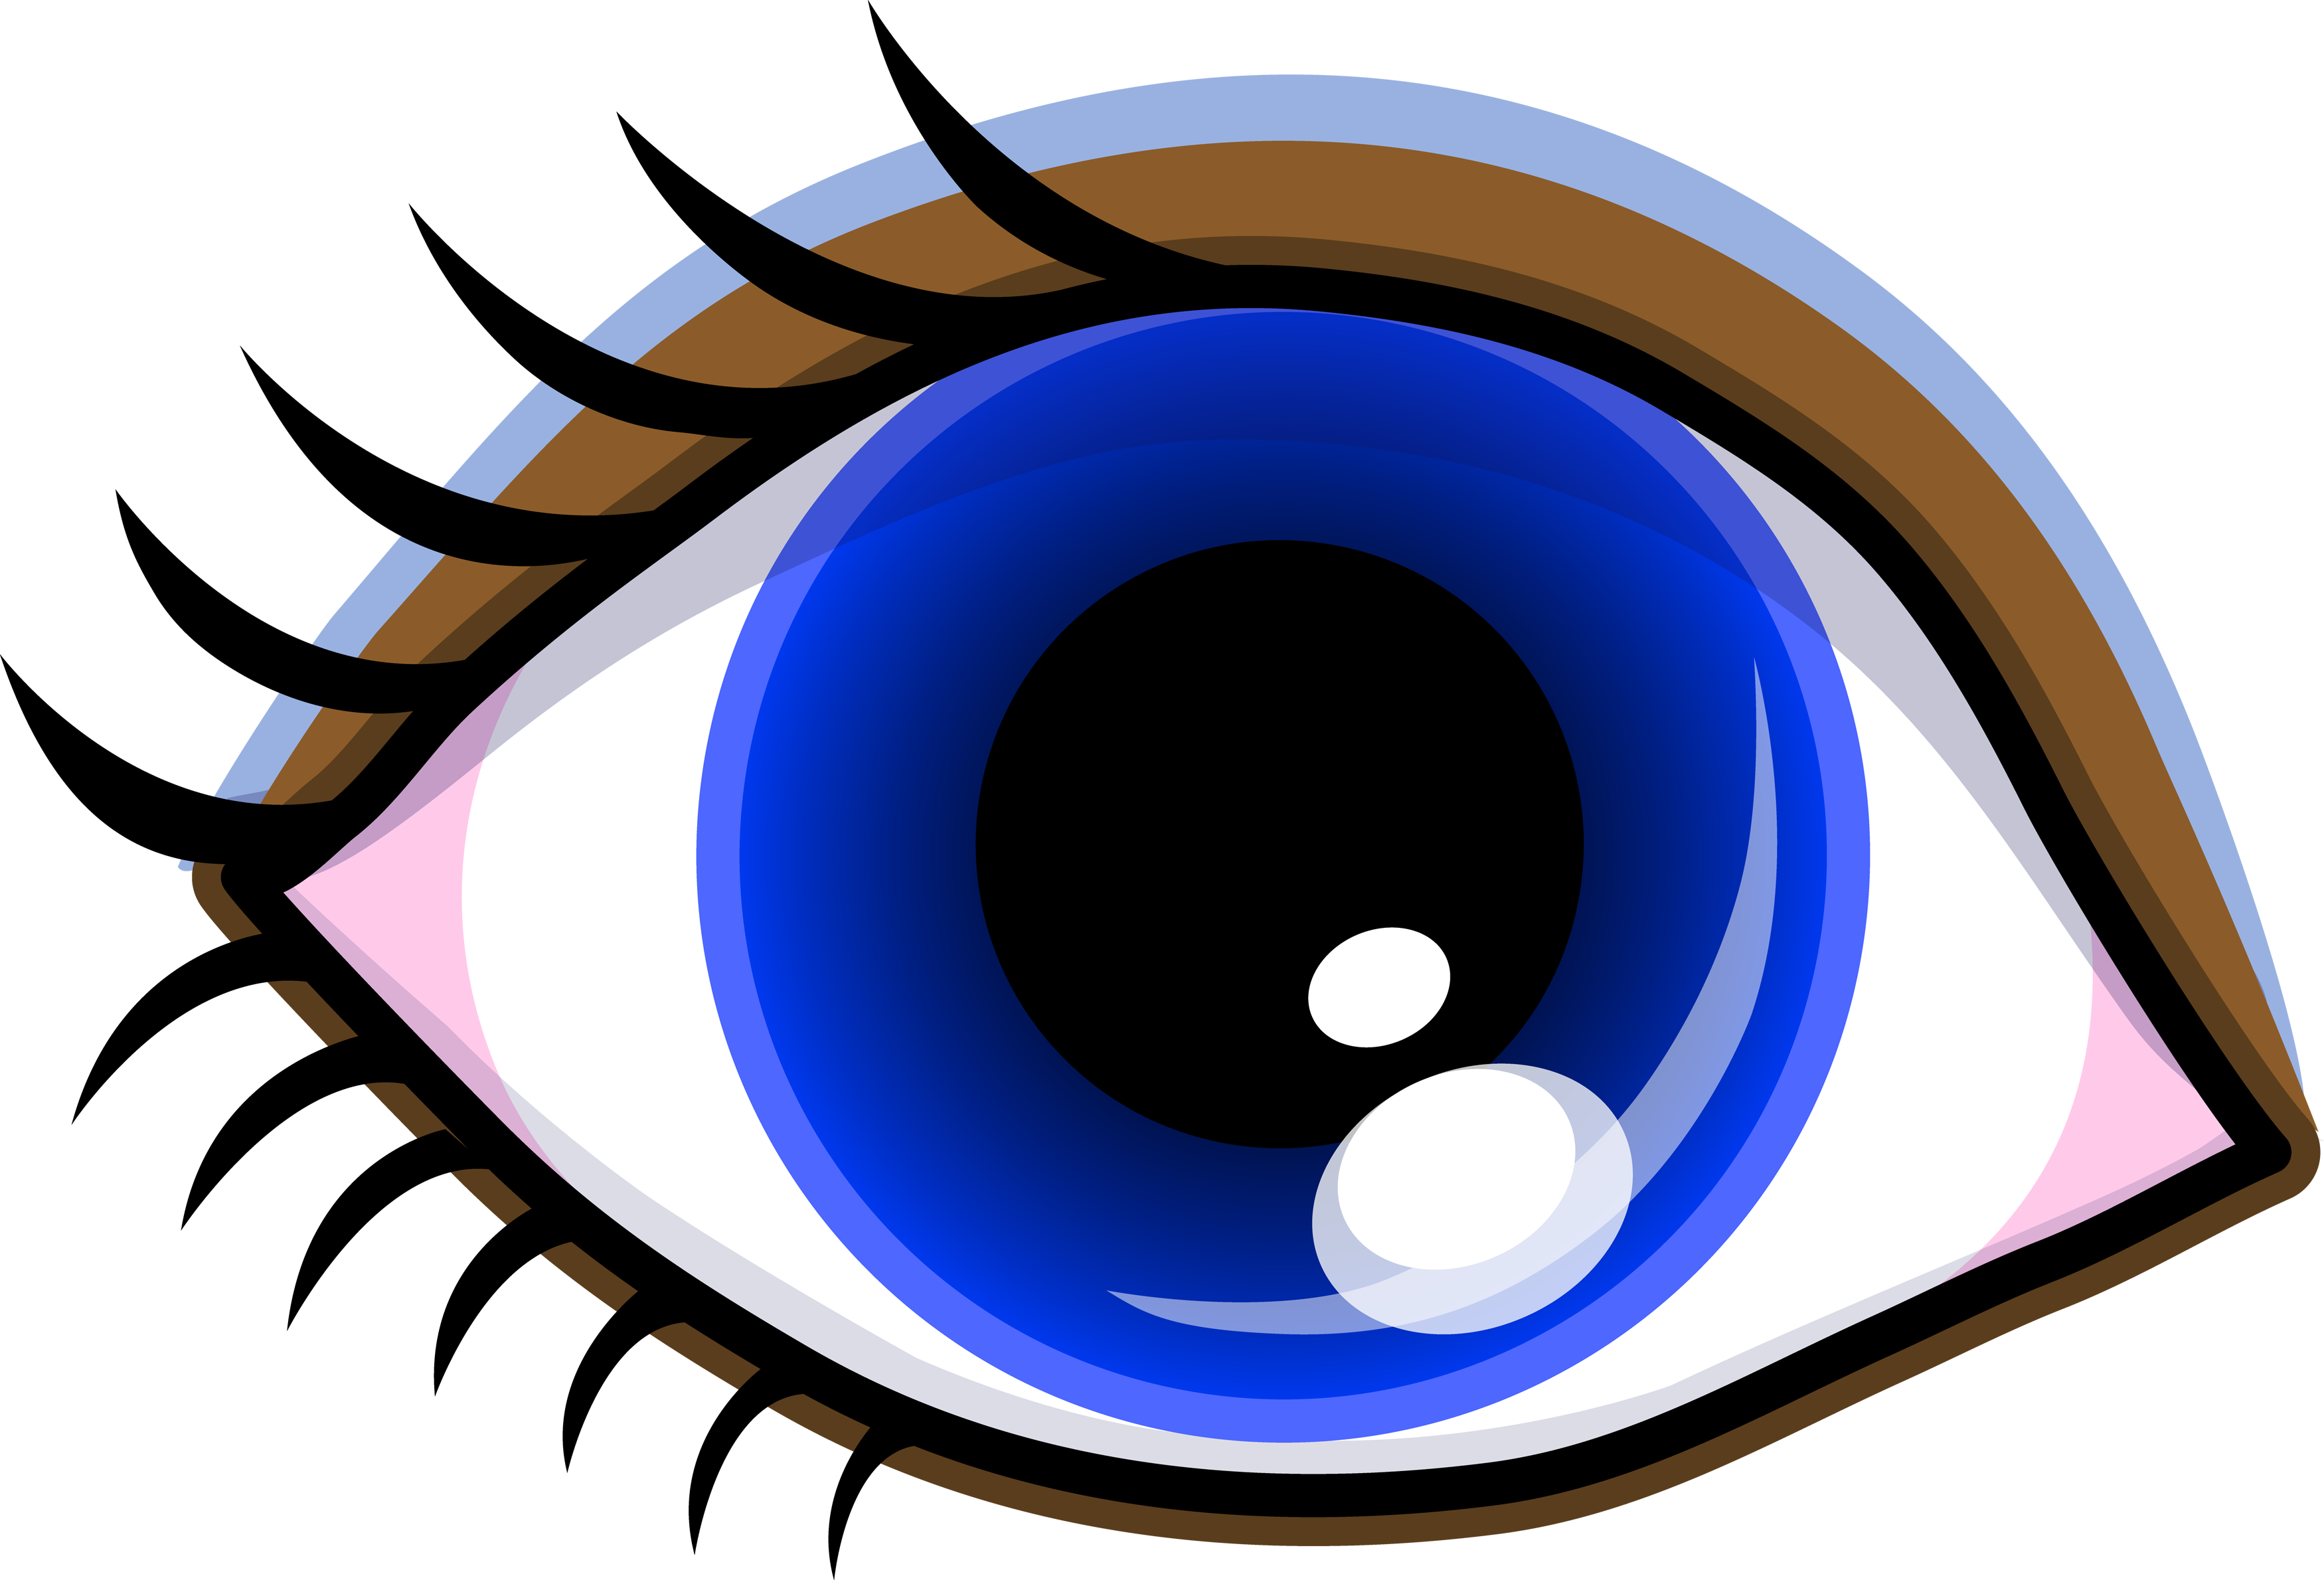 Eyelash Clipart Cute Eye Pencil And In Color Eyelash - Cartoon Images Of Eye (3500x2379)